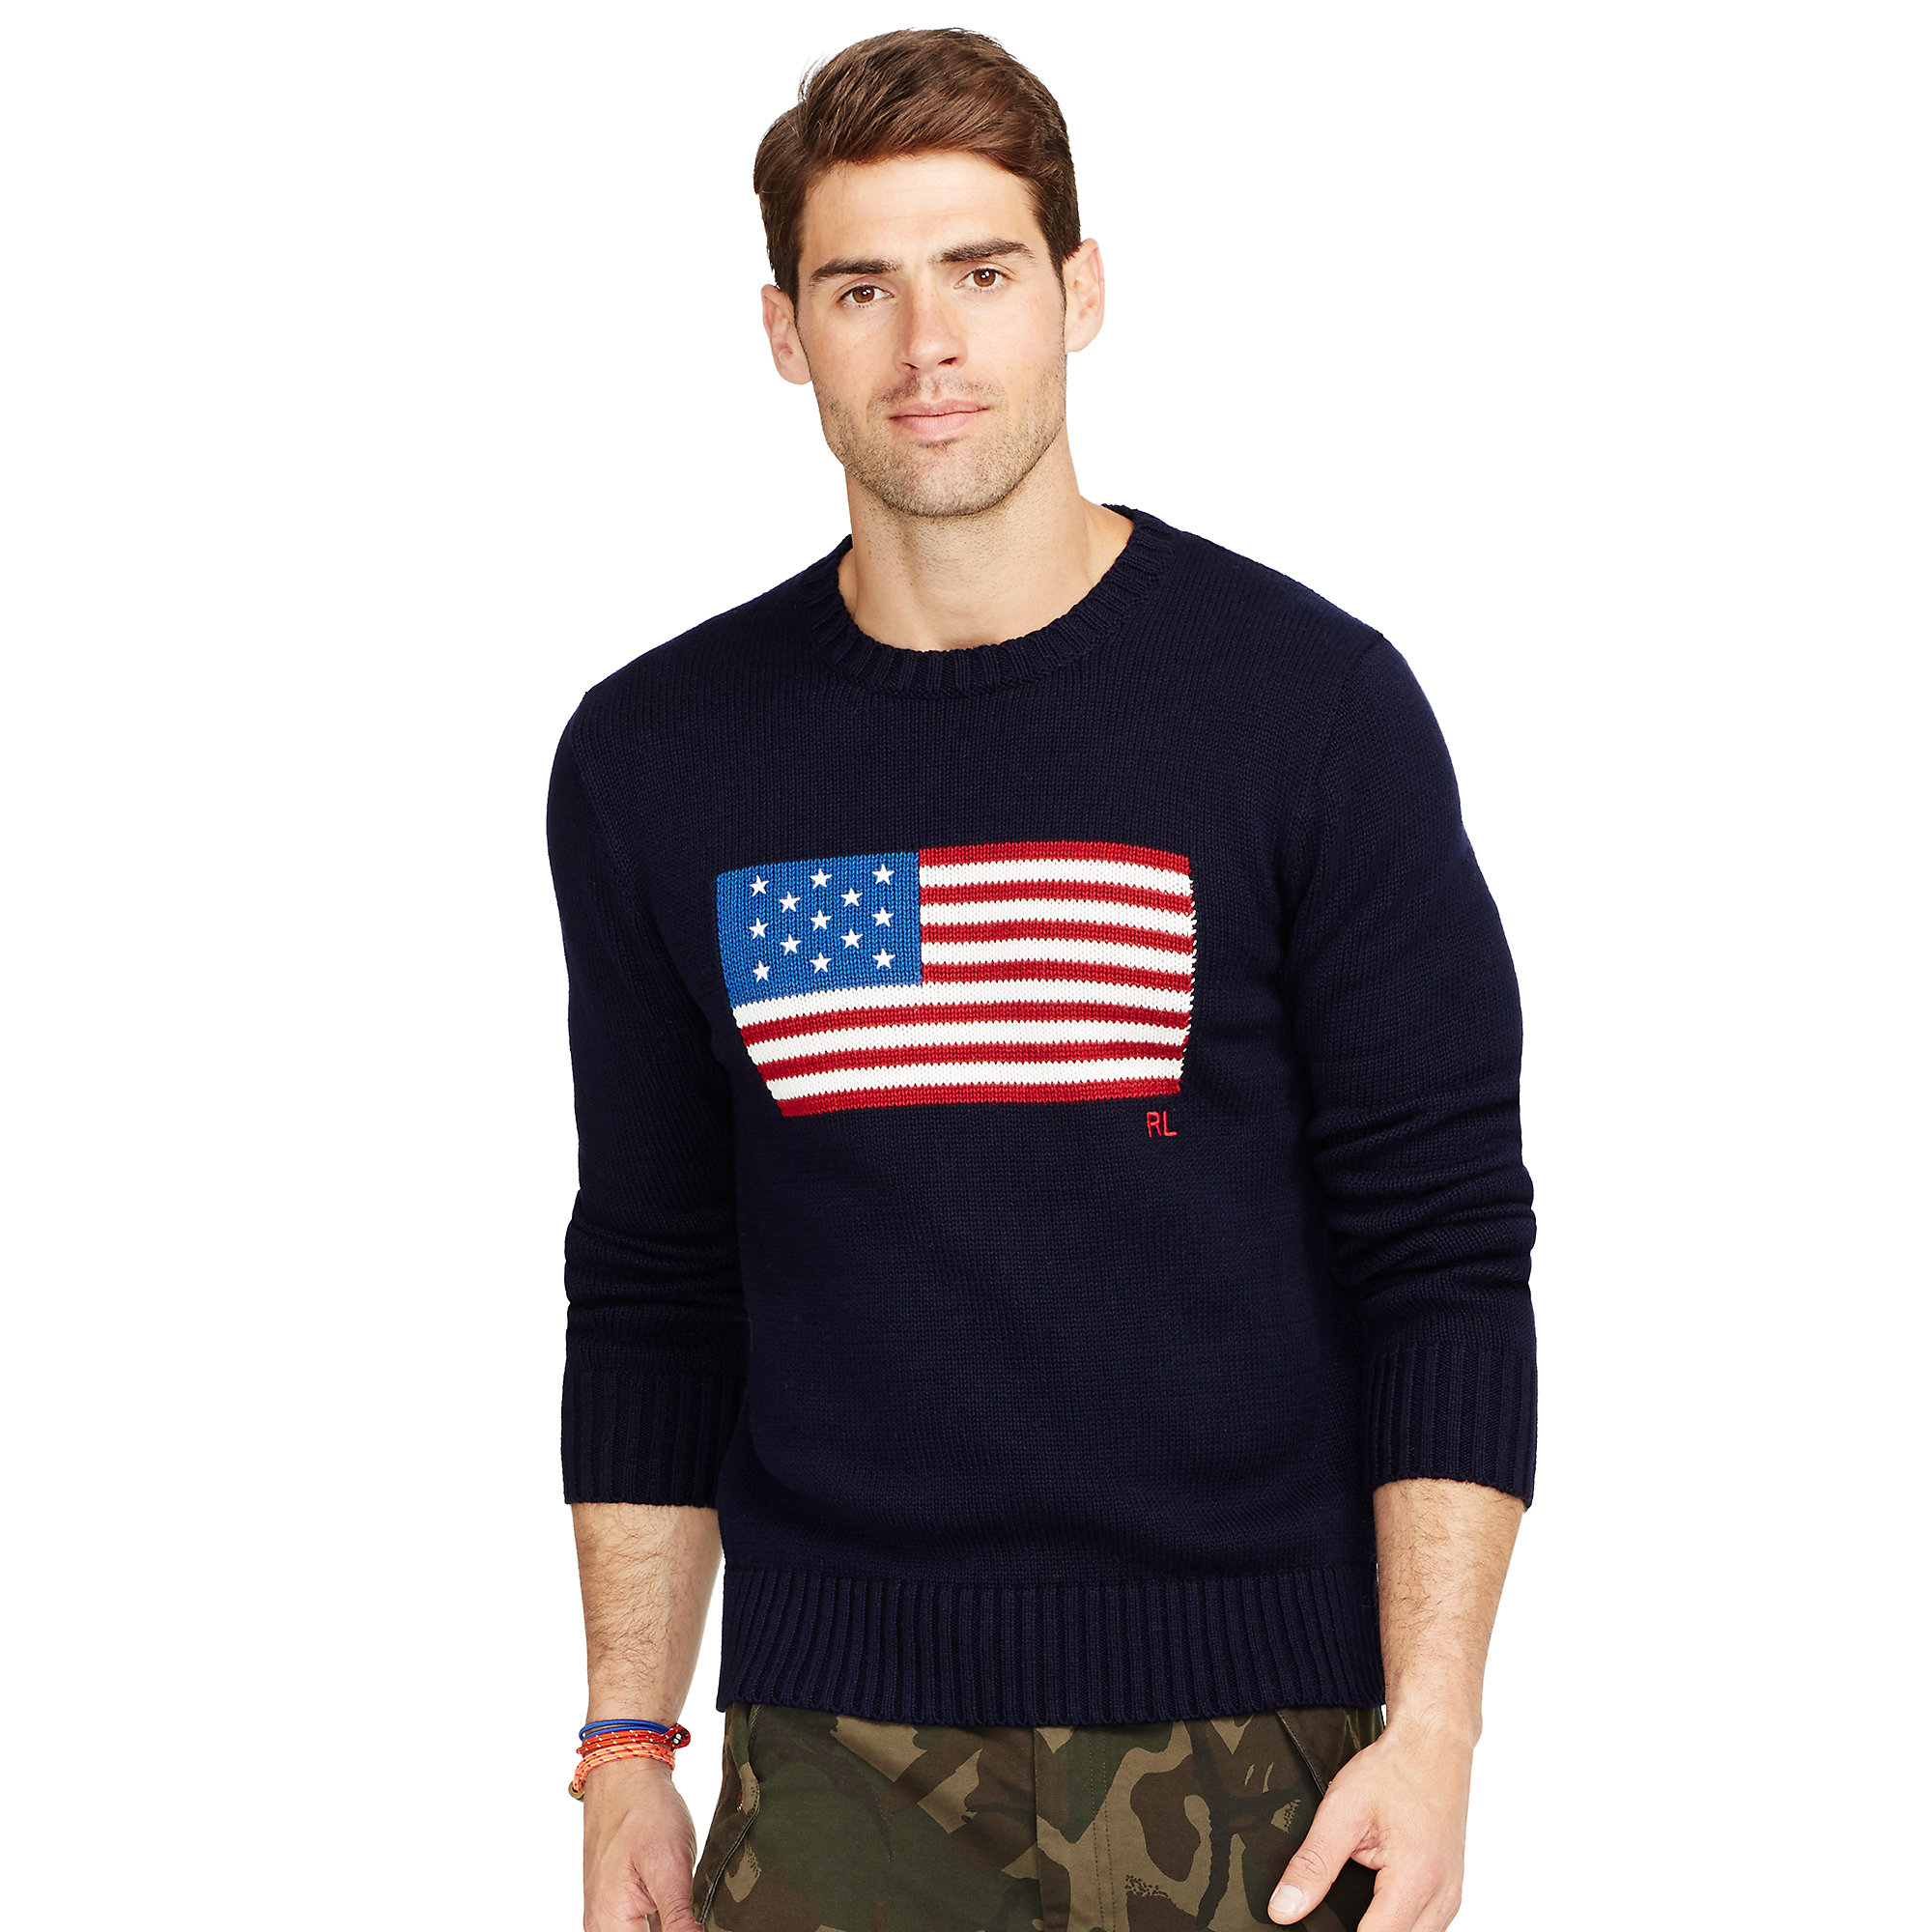 Polo Ralph Lauren Flag Cotton Crewneck Sweater in Blue for Men - Lyst